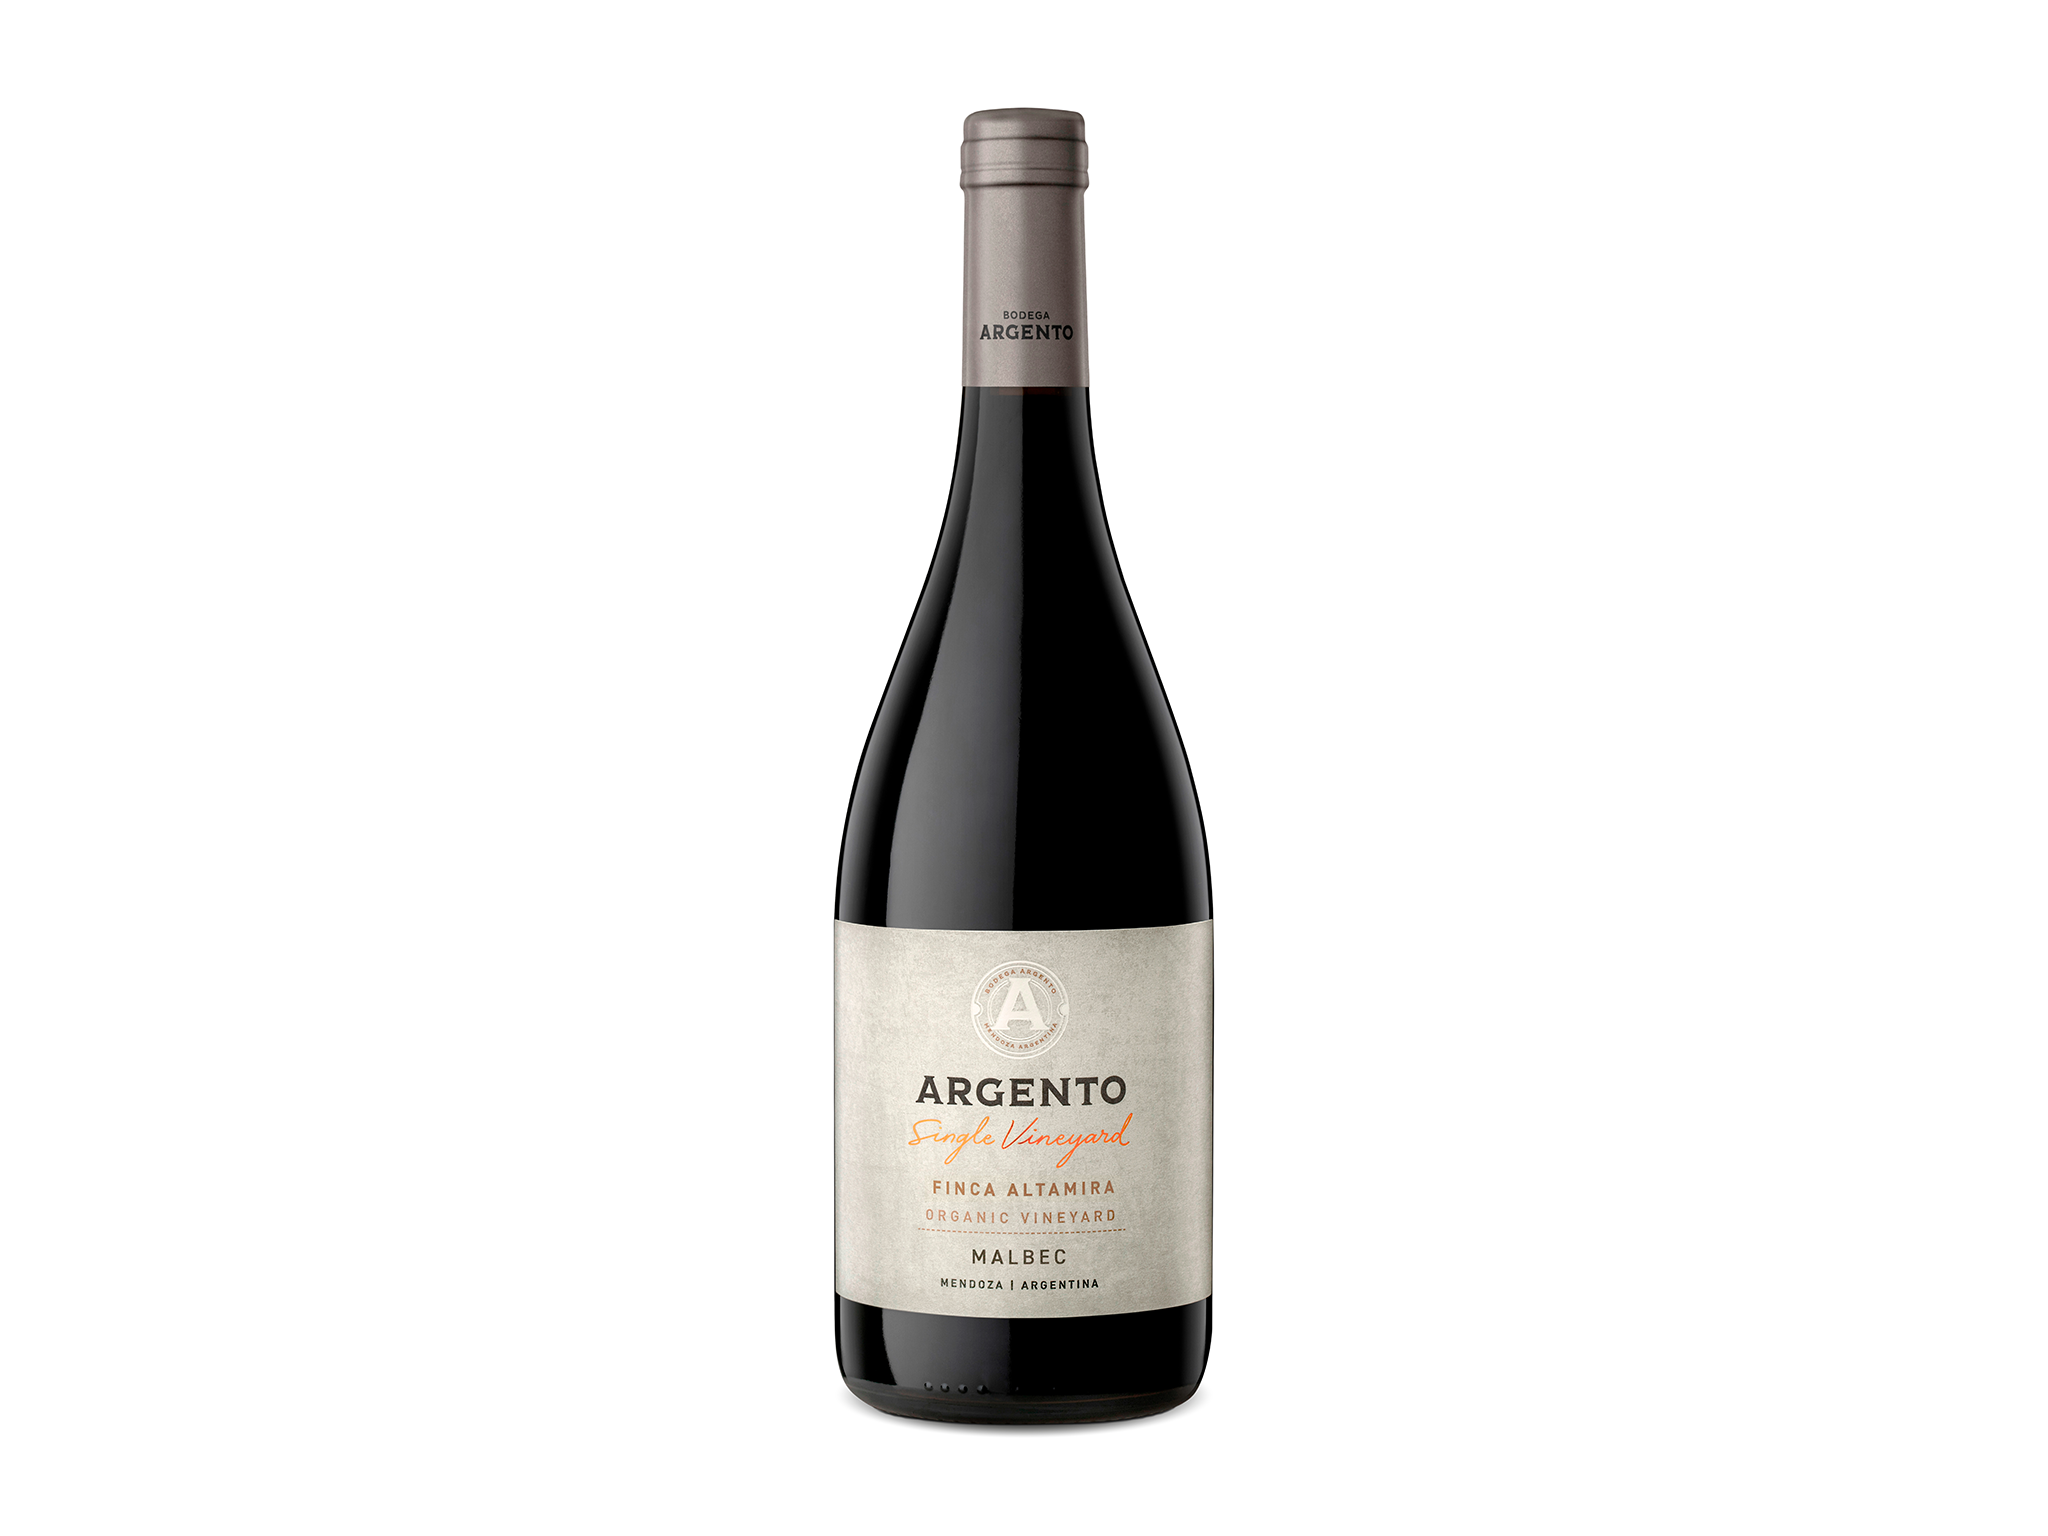 Argento single vineyard malbec